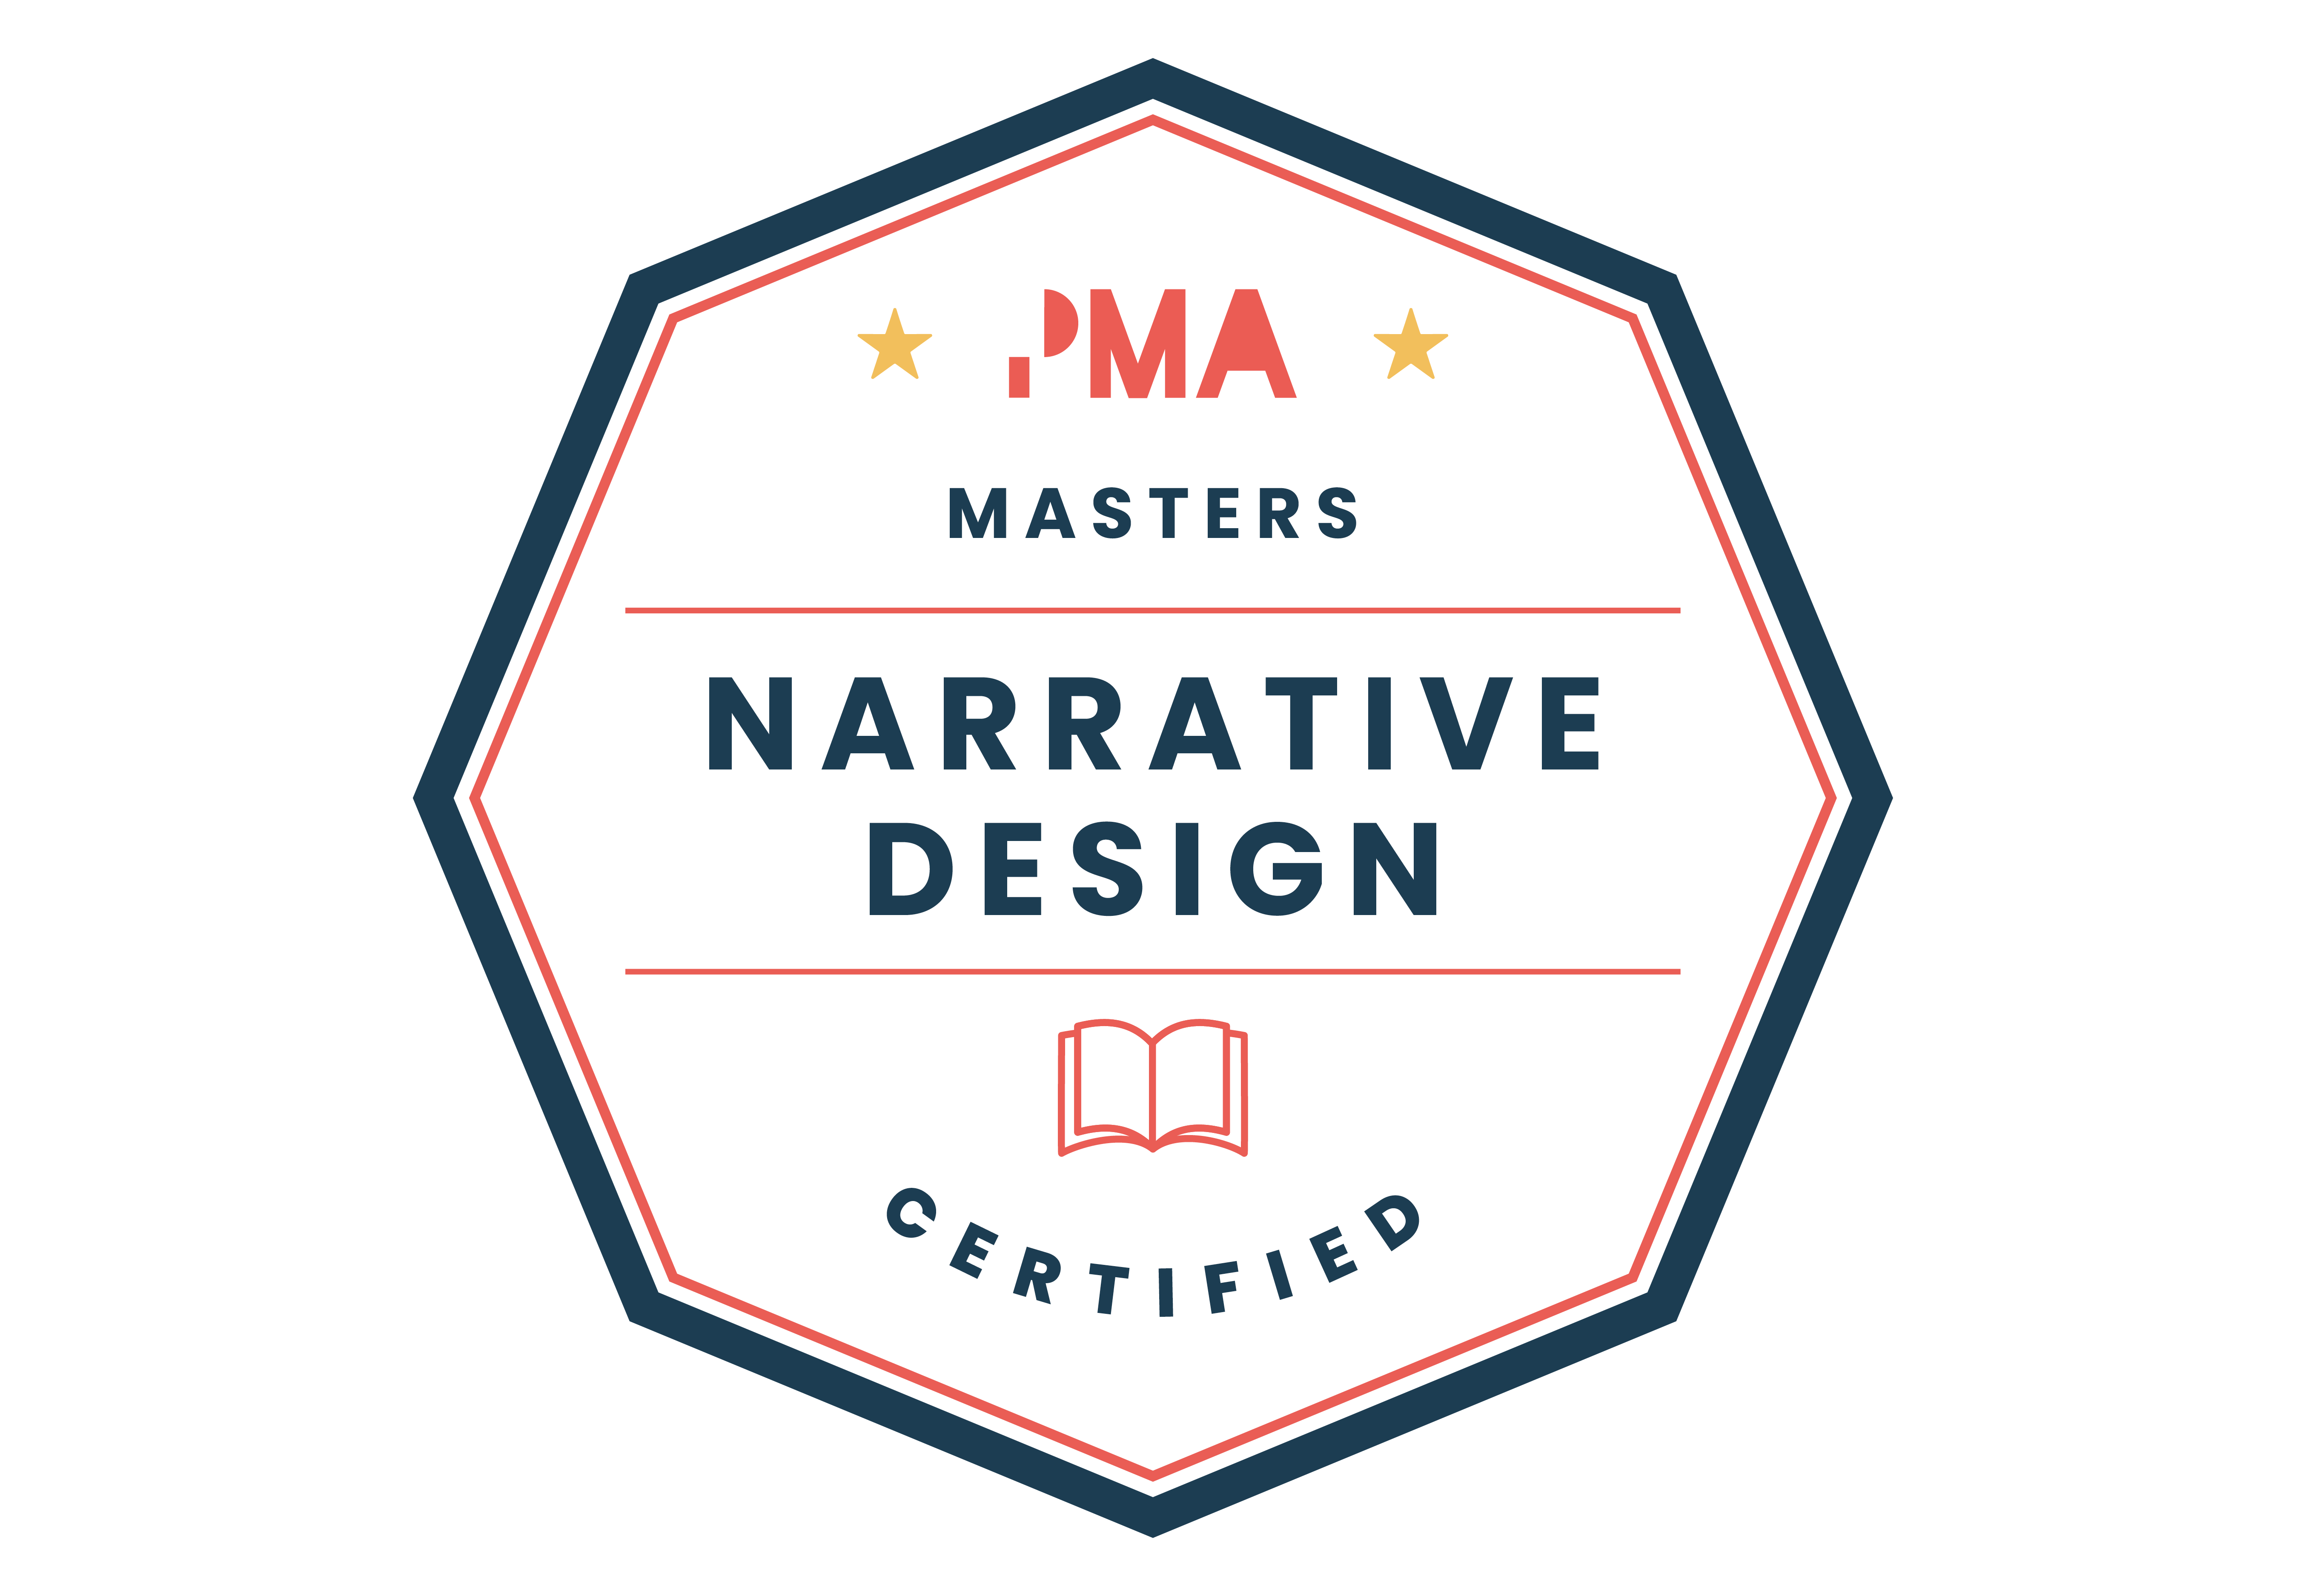 Narrative Design Certified | Masters badge